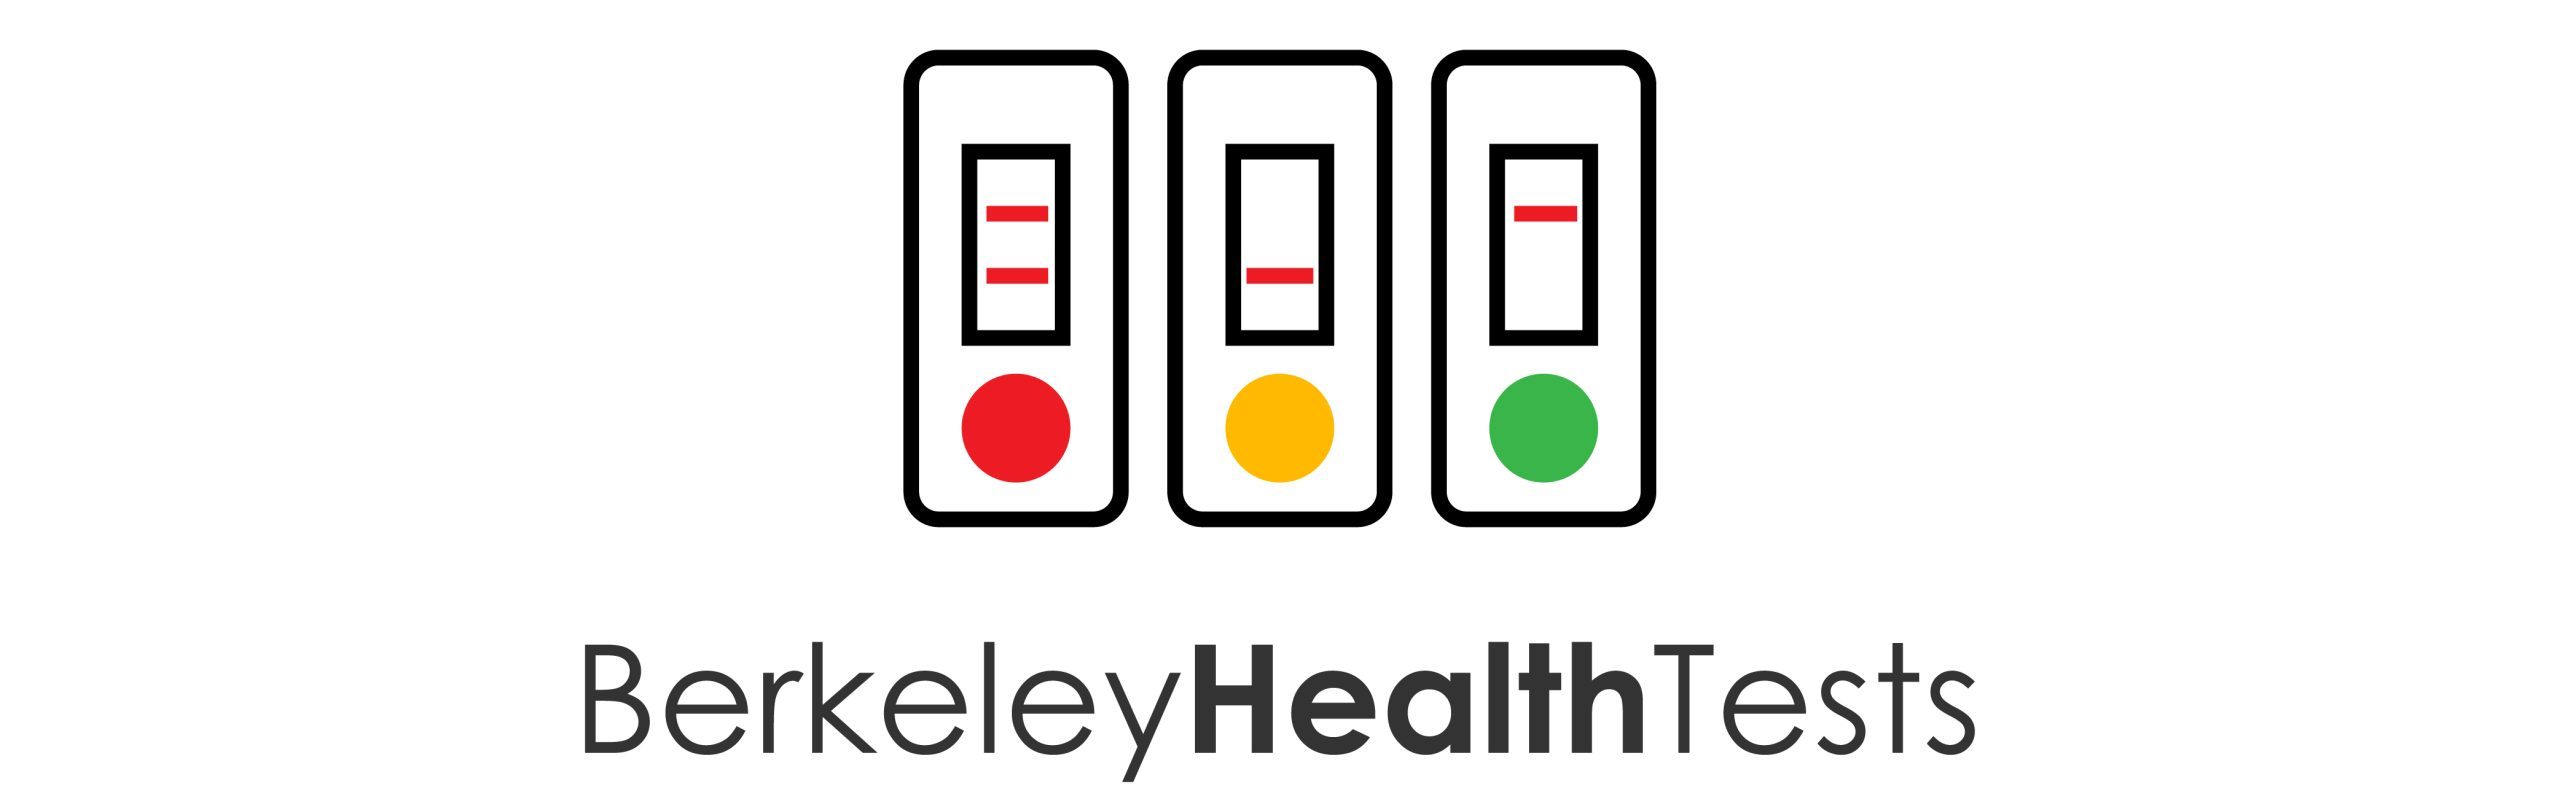 Berkeley Health Test Google Ads Case Study